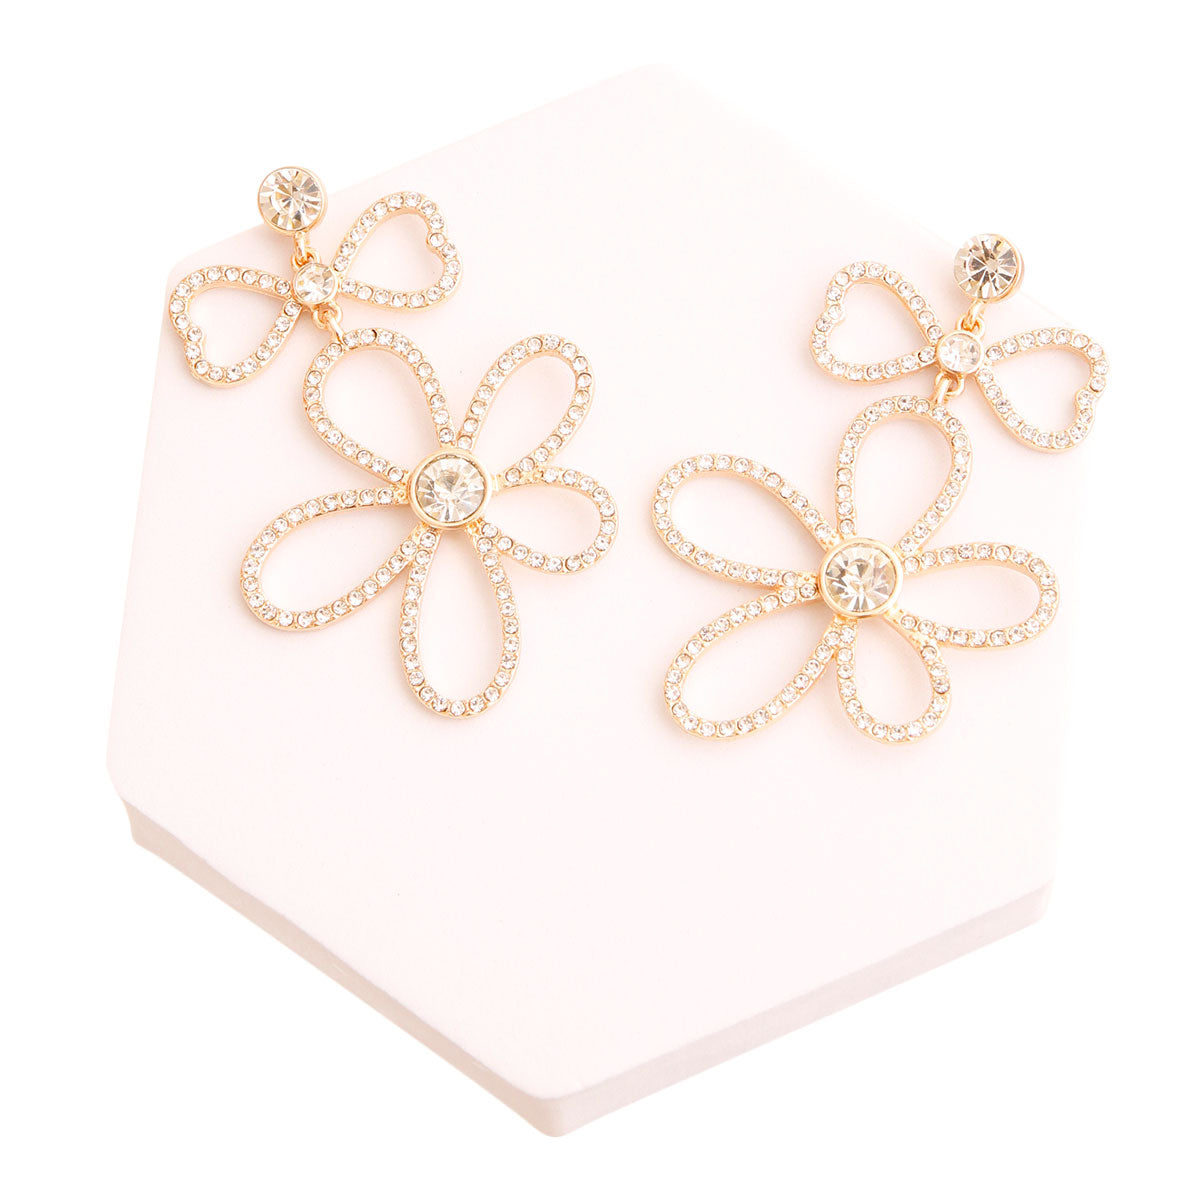 Gold and Rhinestone Bow Flower Earrings